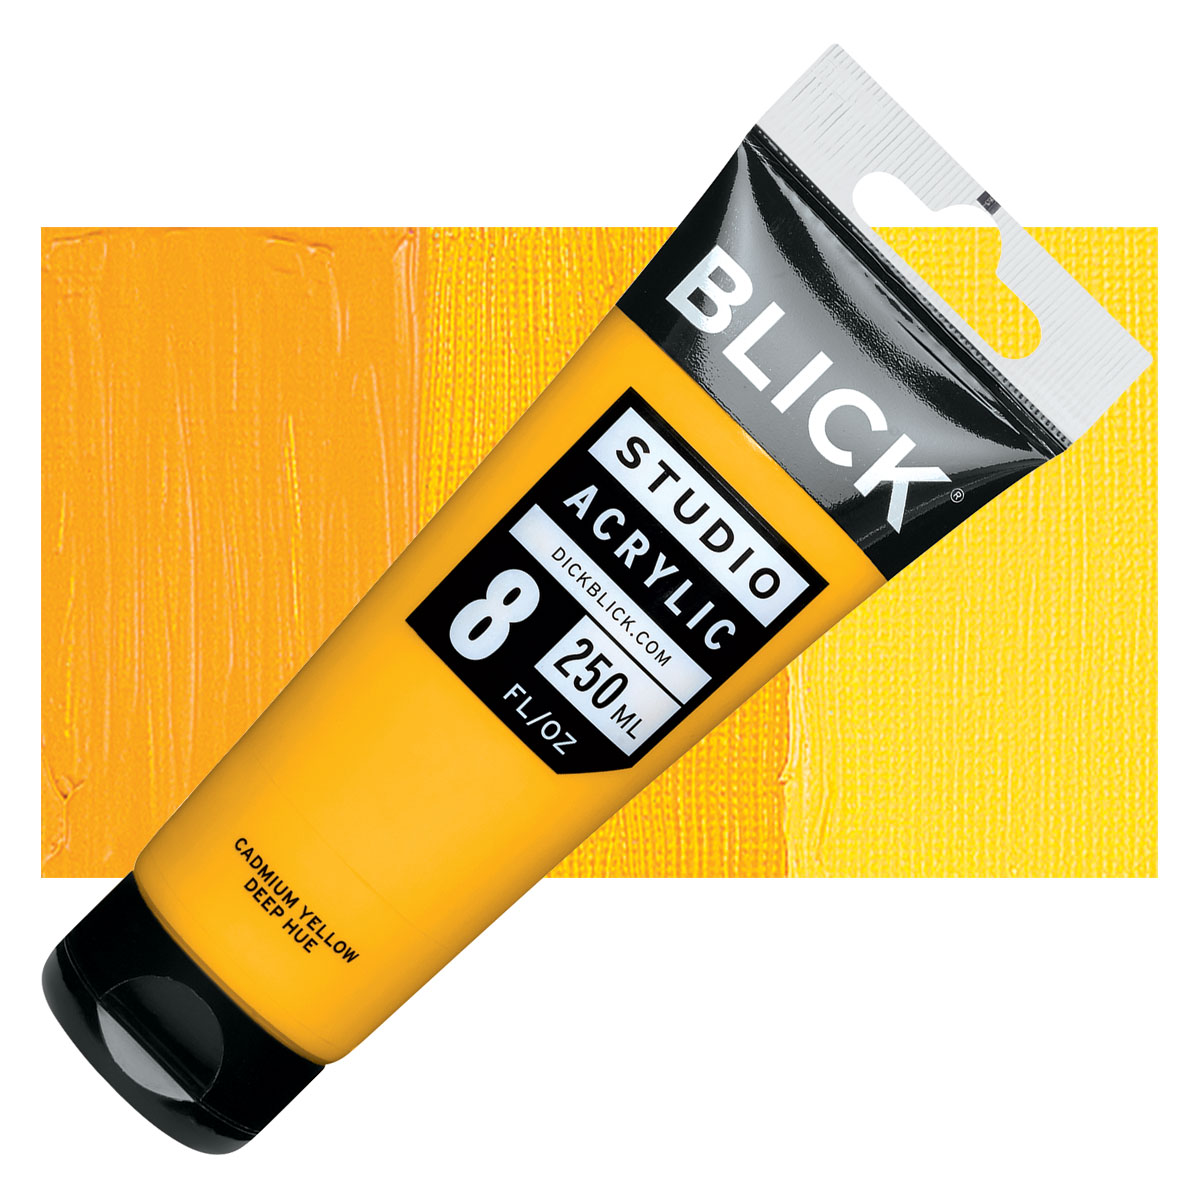 Blick Studio Acrylics - Titanium White, 4 oz tube